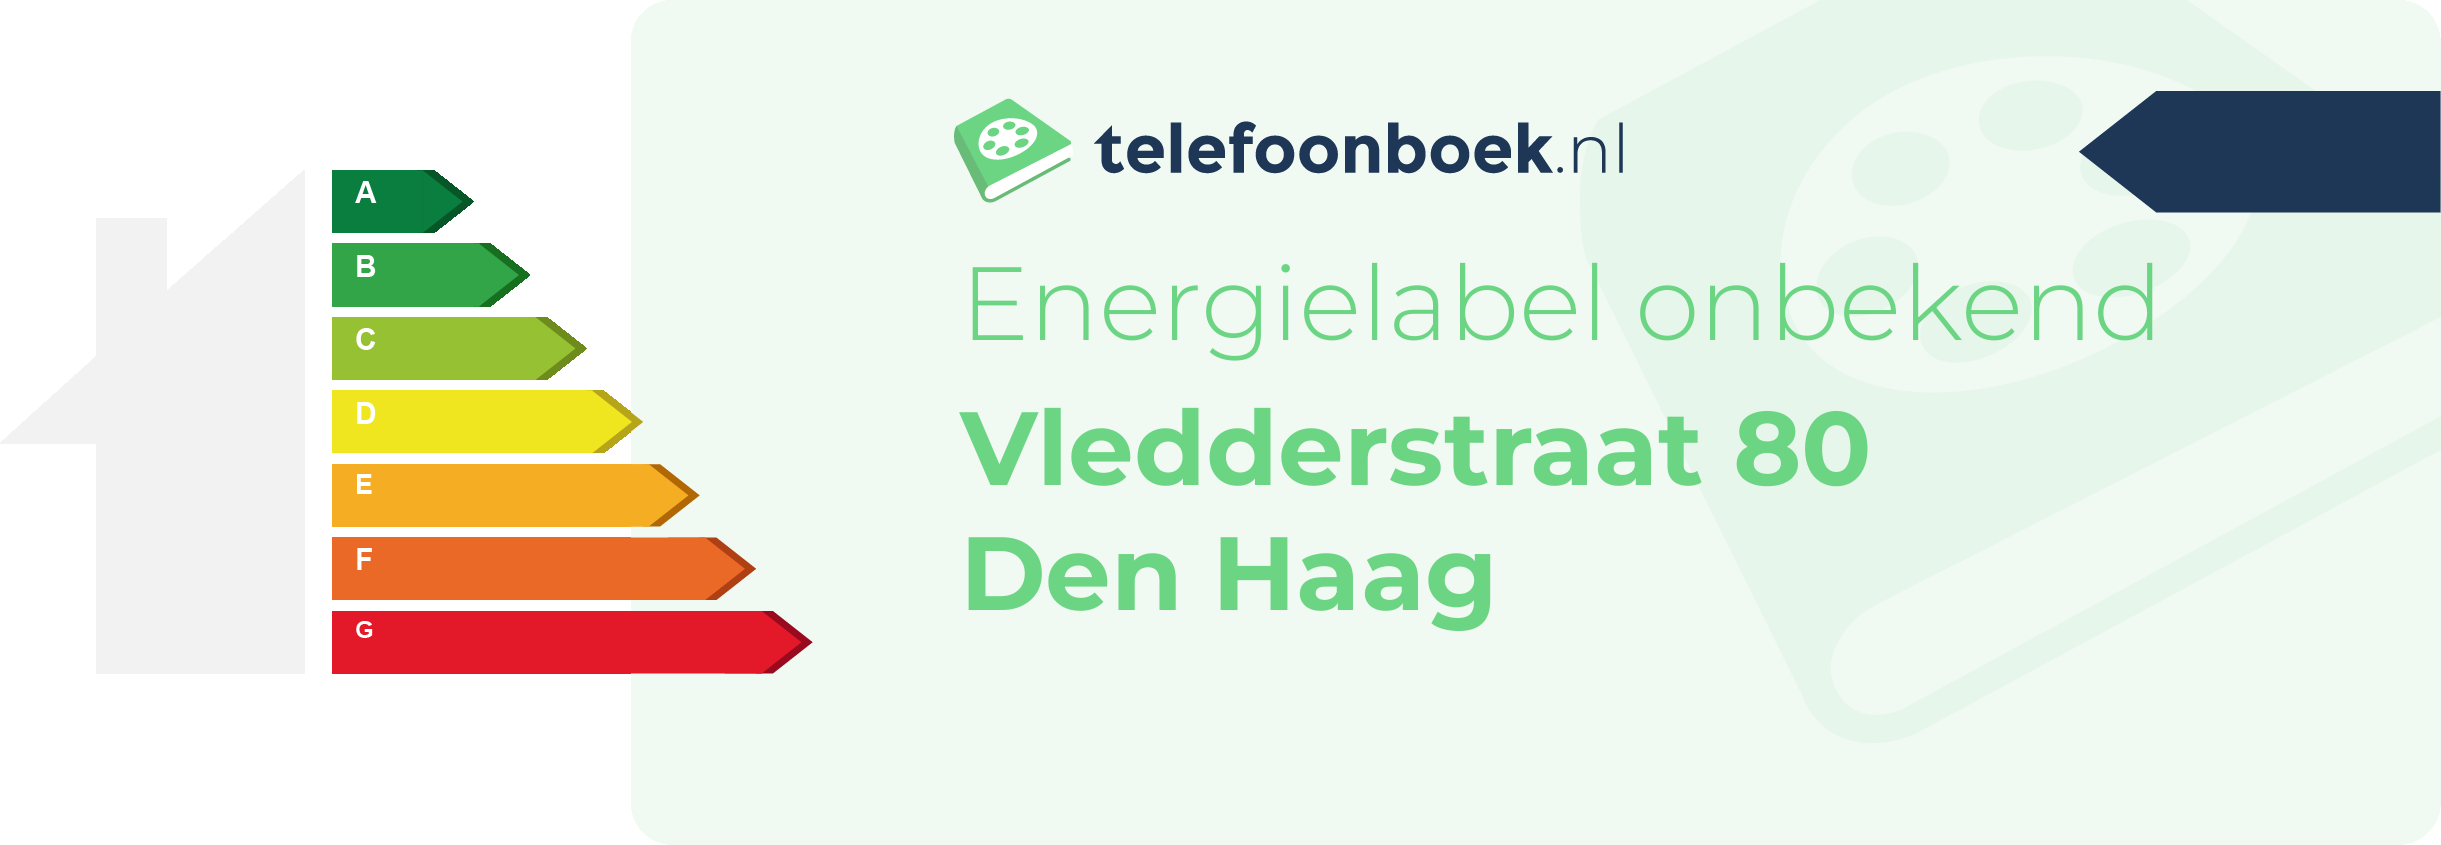 Energielabel Vledderstraat 80 Den Haag